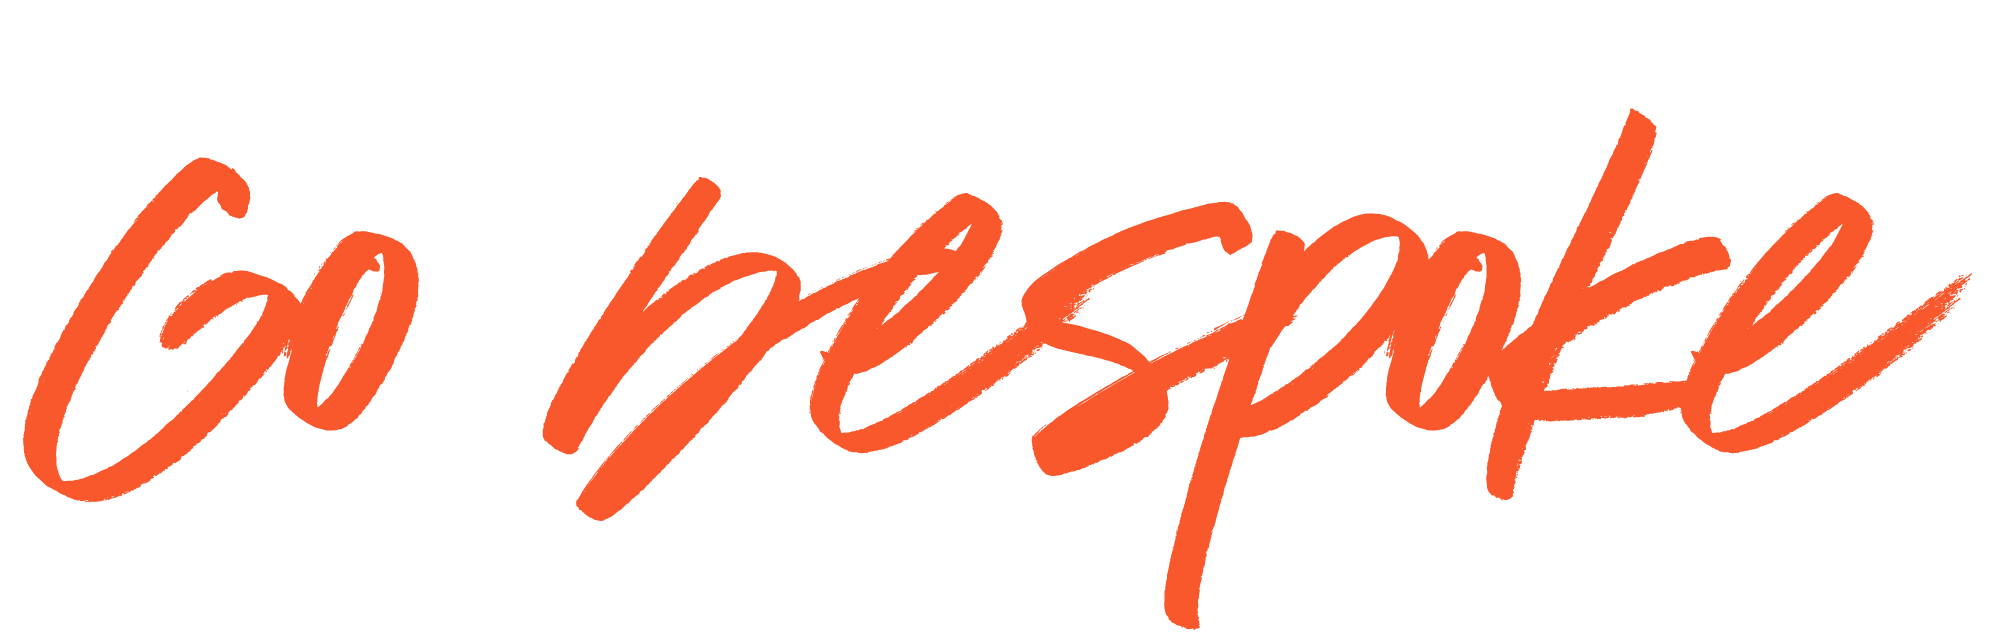 Created your own artwork? Go bespoke